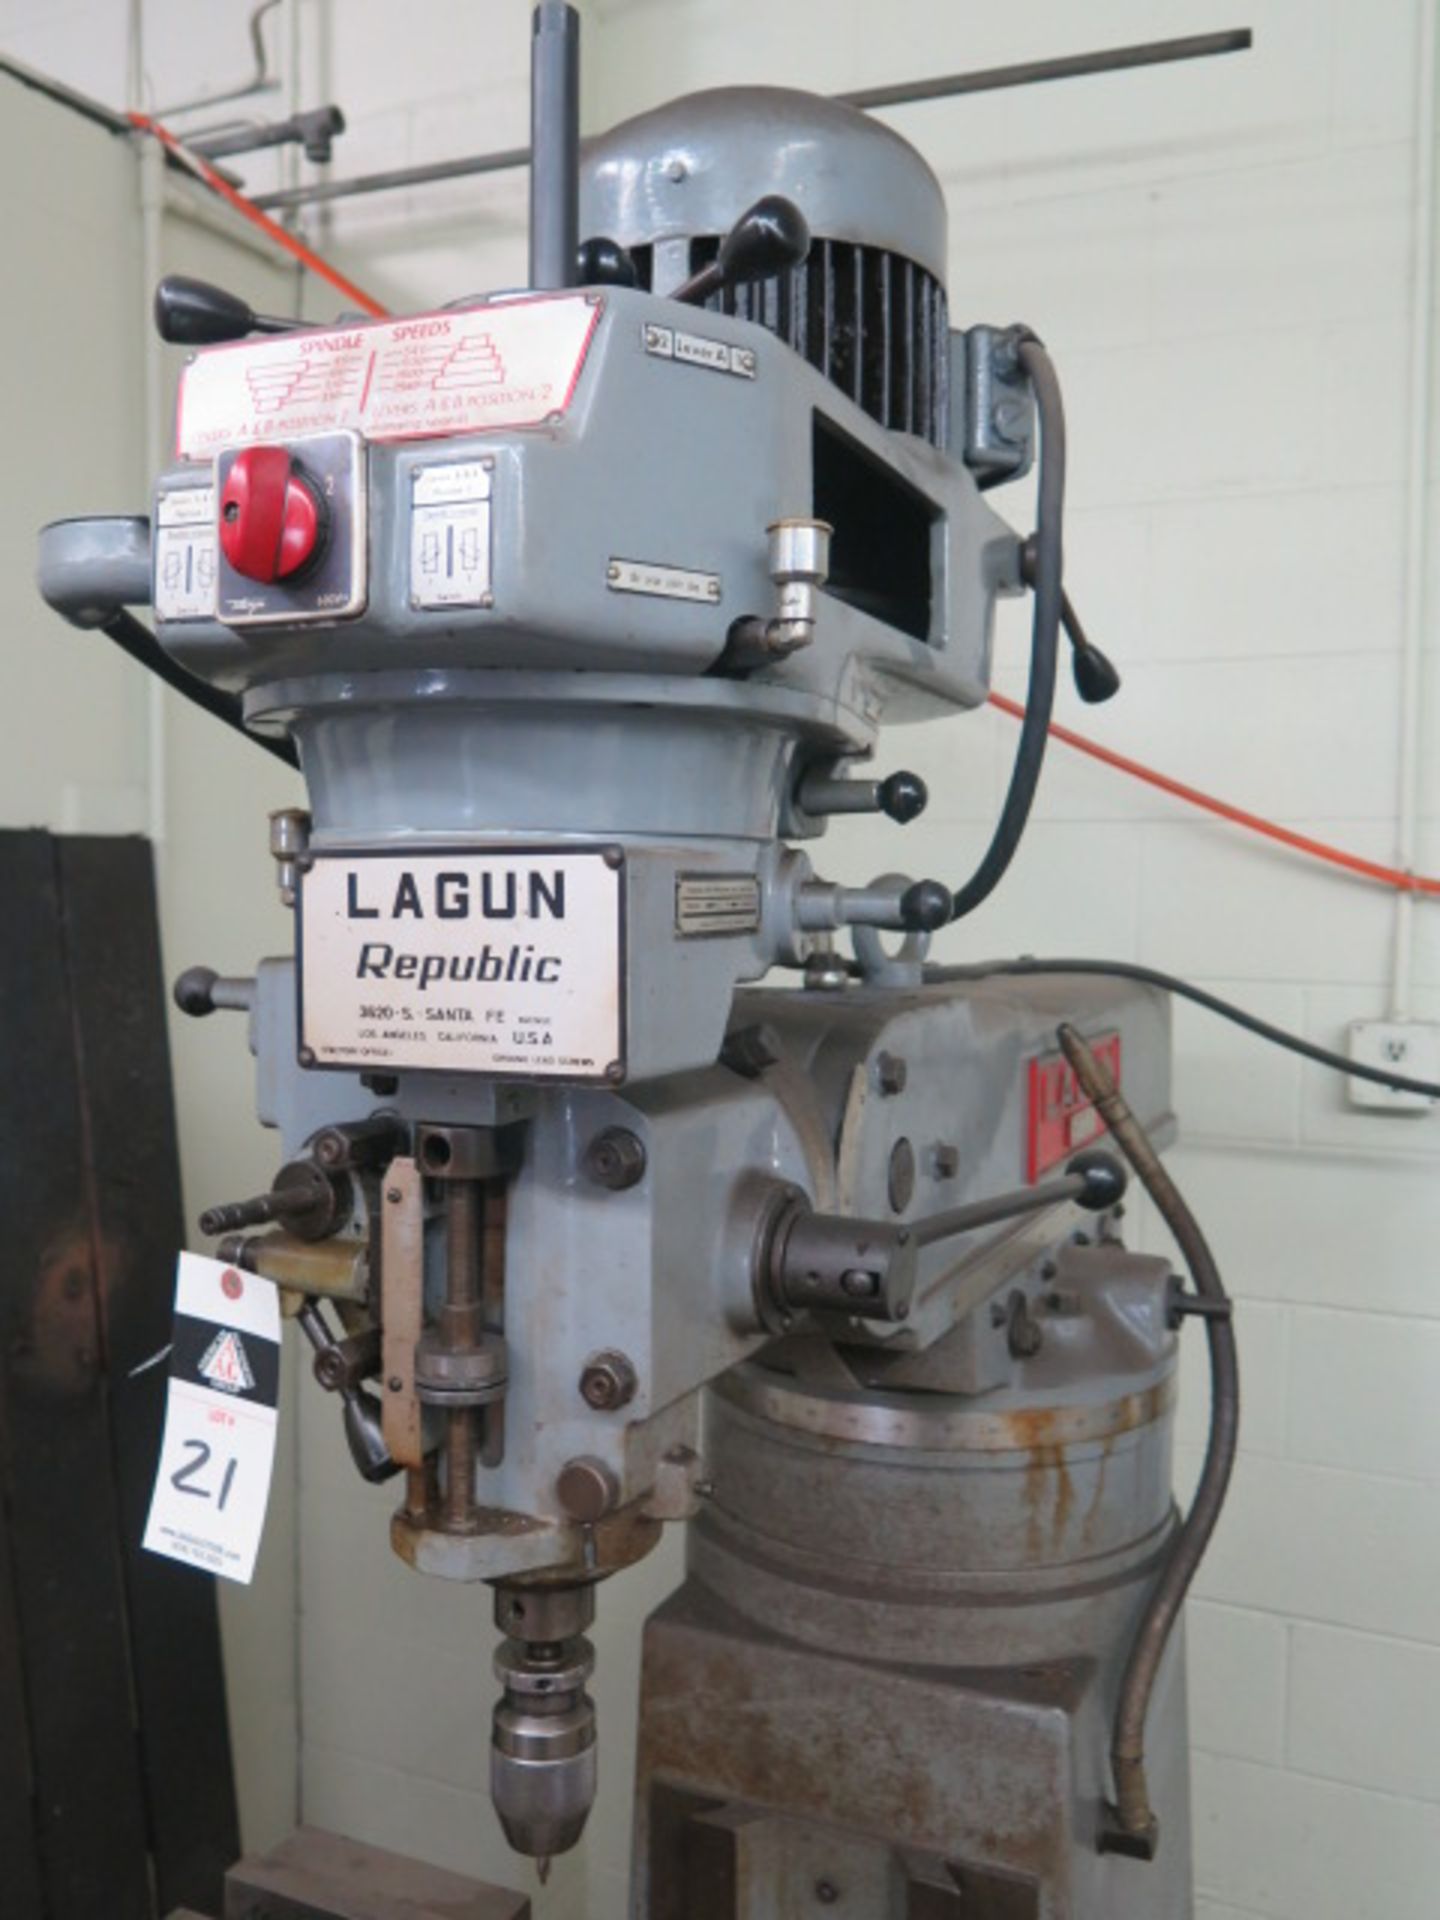 Lagun FT-1 Vertical Mill s/n SE-3115 w/ 2Hp Motor, 55-2940 RPM, 8-Speeds, 4” Riser, Power Feed, 9” x - Image 3 of 12